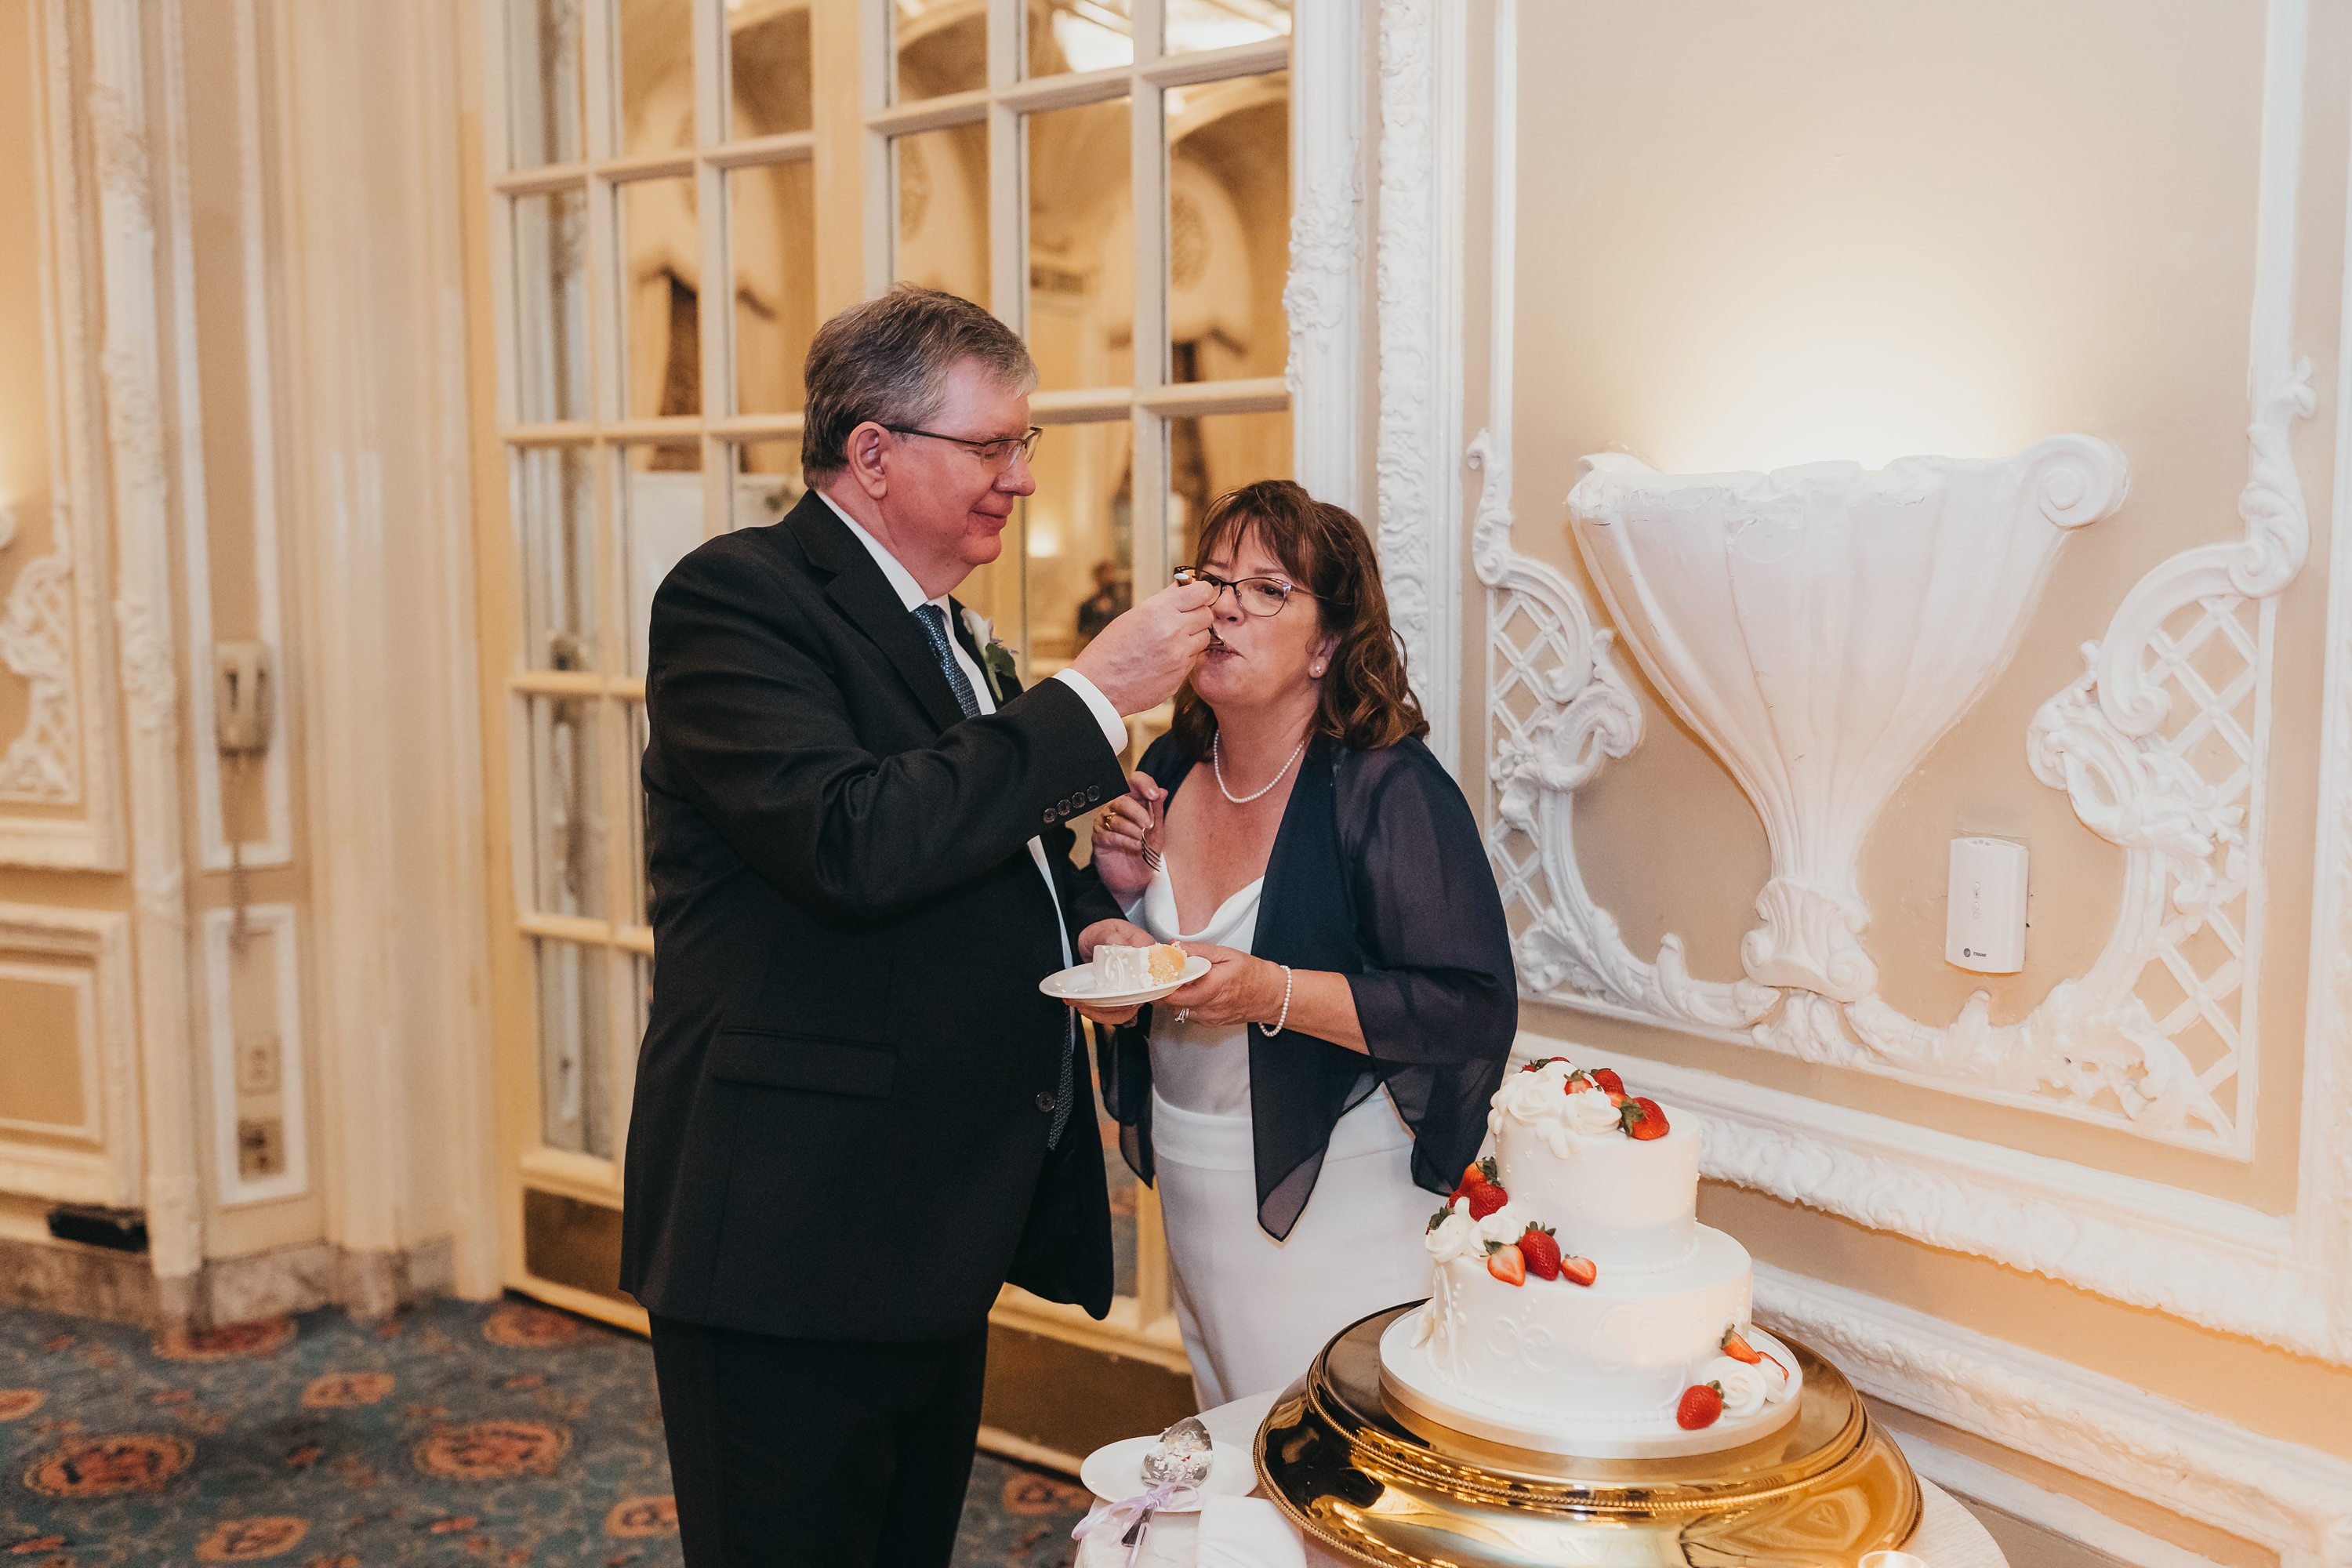 2020 covid wedding,fairmont hotel copley,dessert works bakery boston,couple feeding each other wedding cake